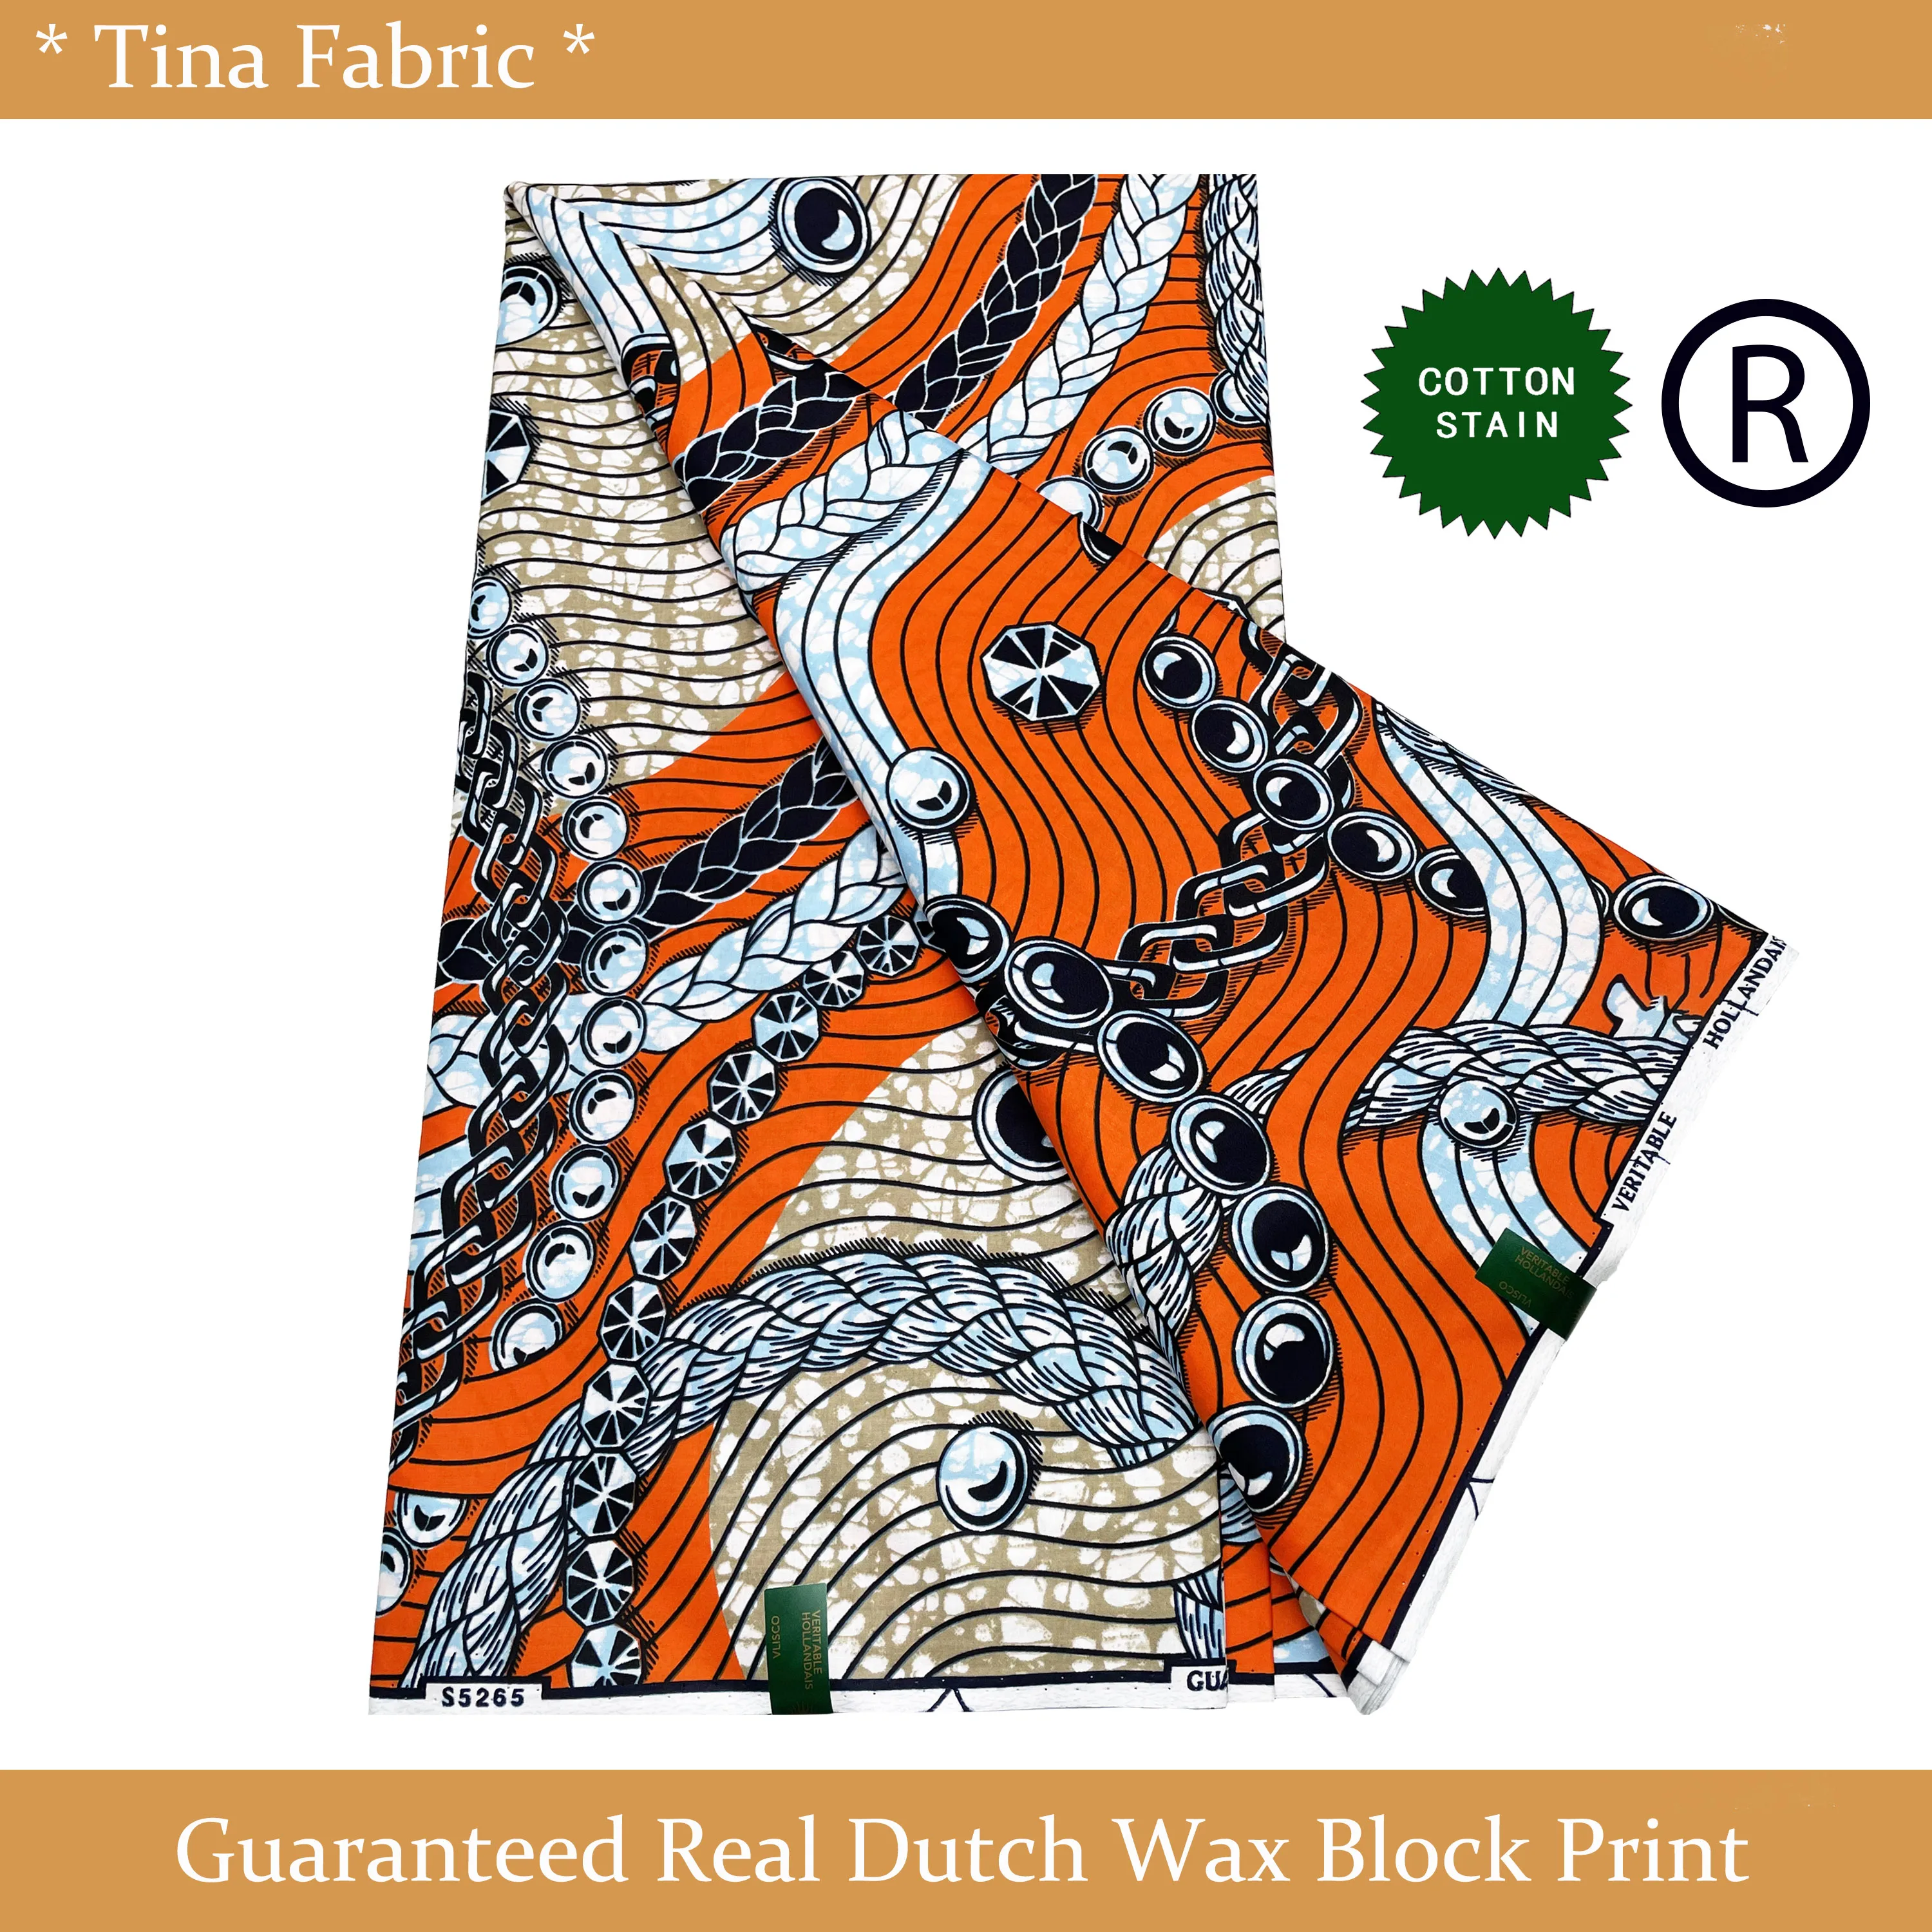 

100%Genuine Grand Super African Wax Printed Cotton Fabric Real Original Hollandais Ankara Wax Block Fabric For Dress Tina-S204